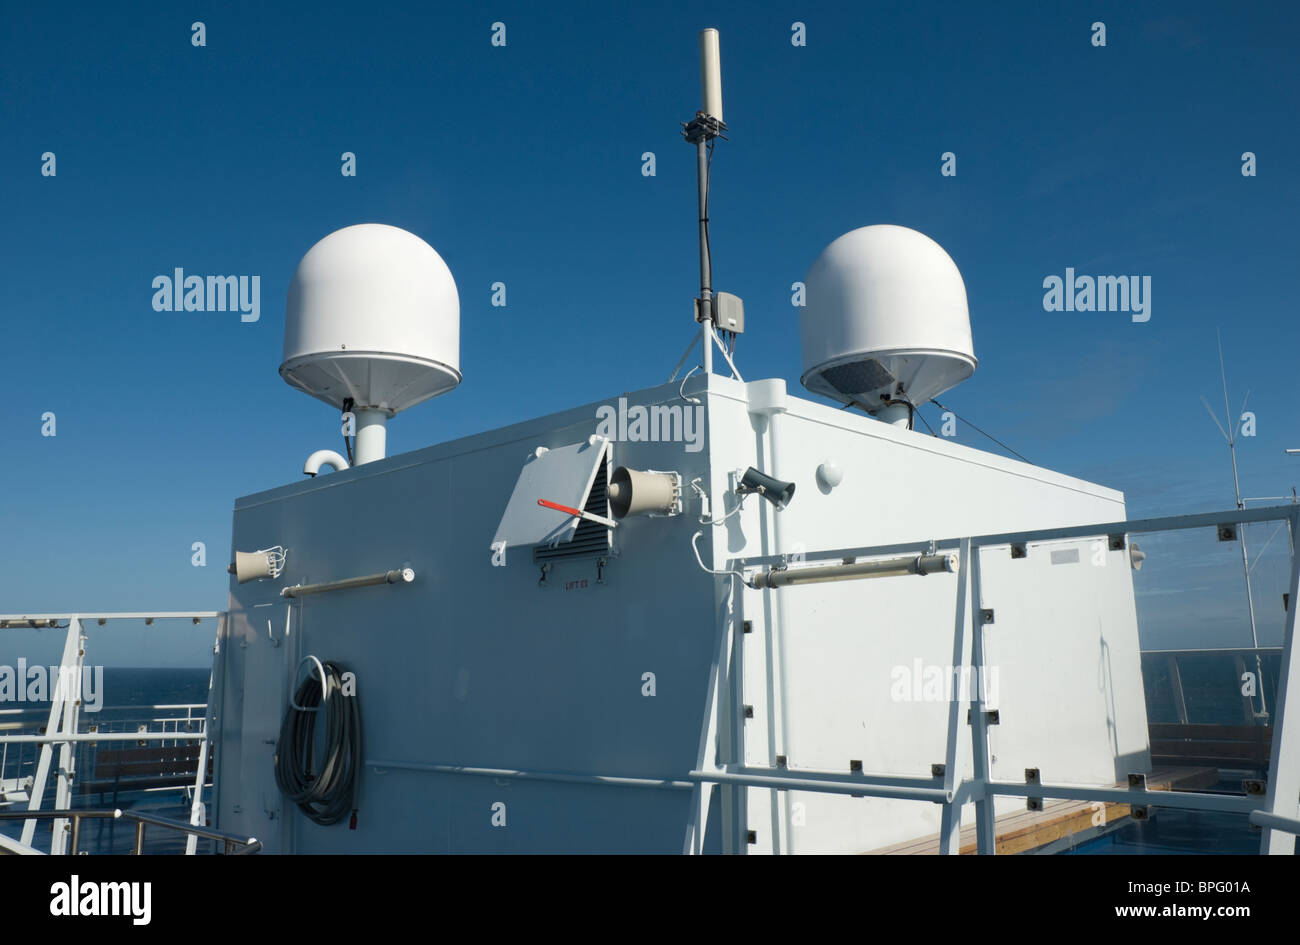 Communication antennas onboard a passenger cruise ship Stock Photo